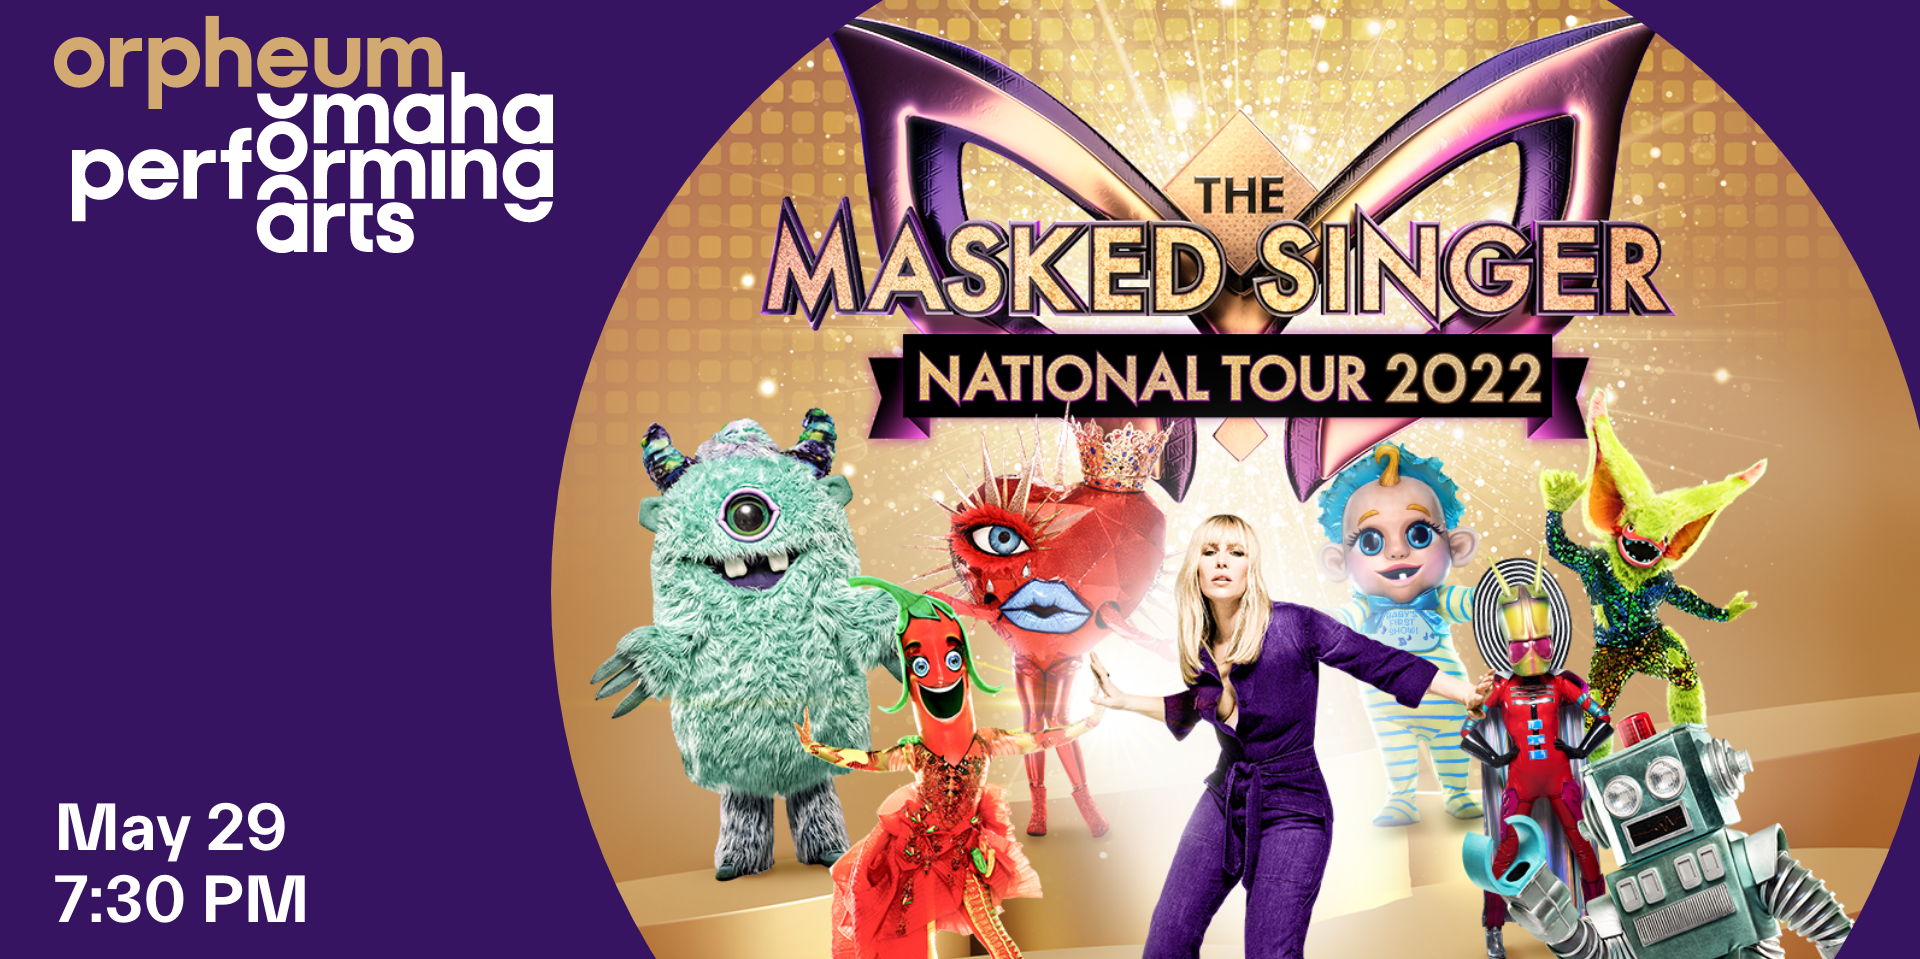 The Masked Singer promotional image